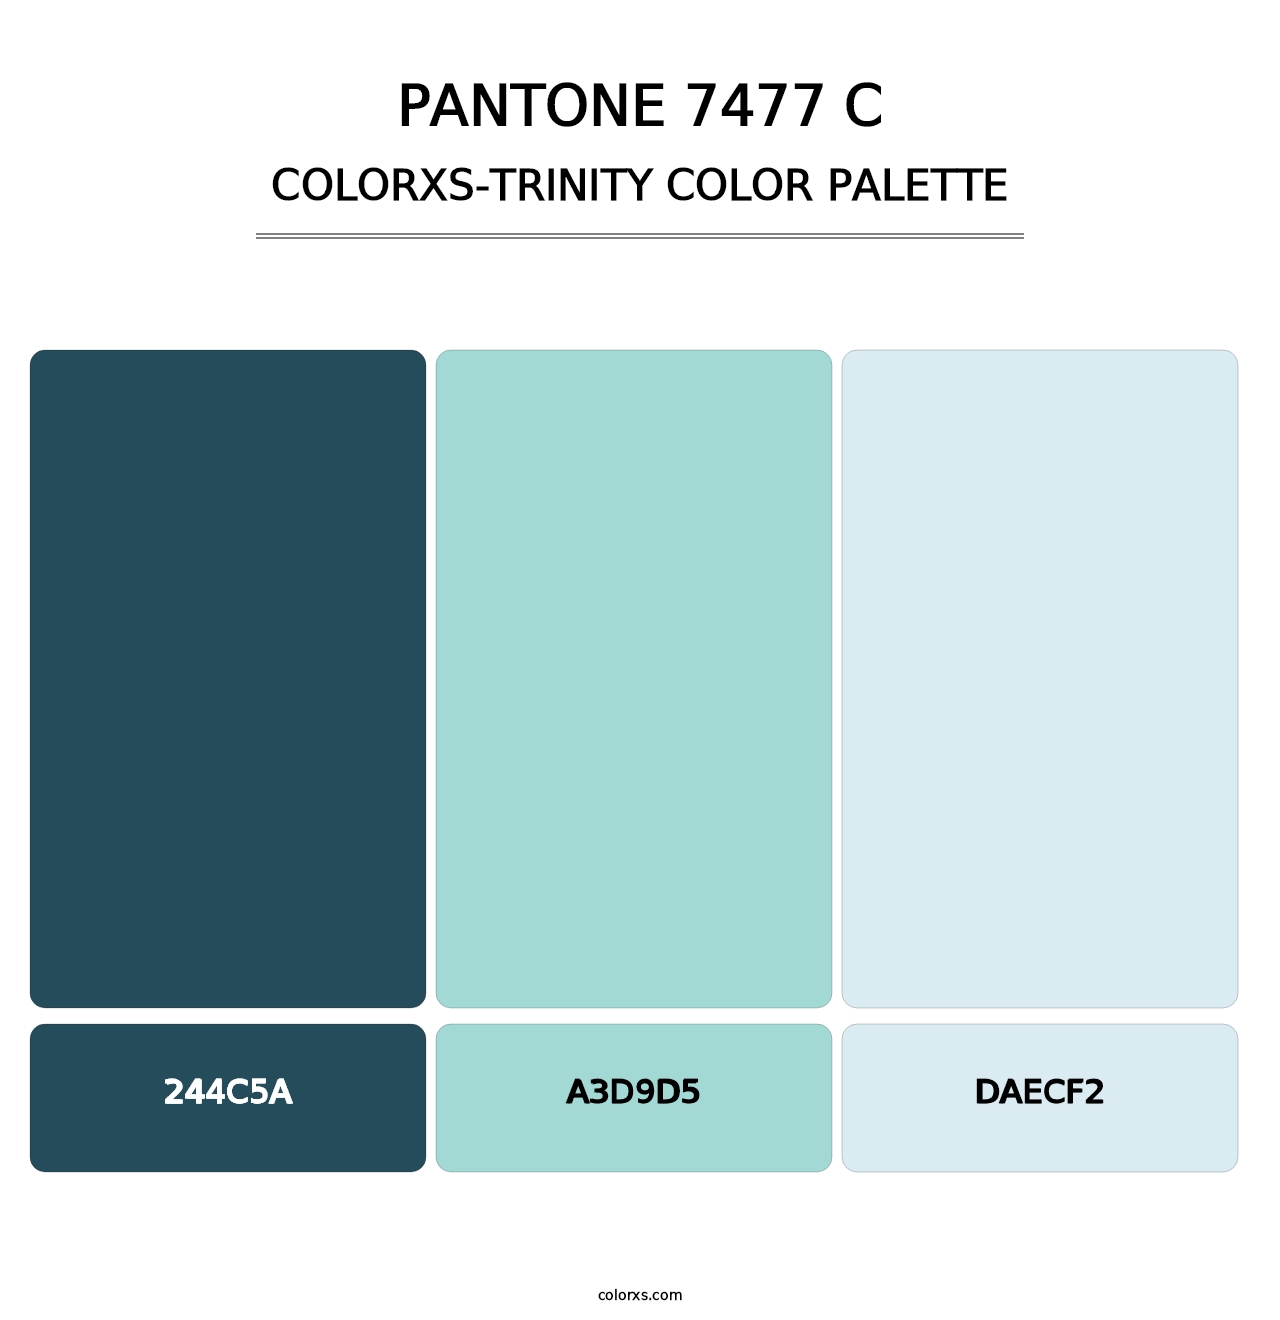 PANTONE 7477 C - Colorxs Trinity Palette